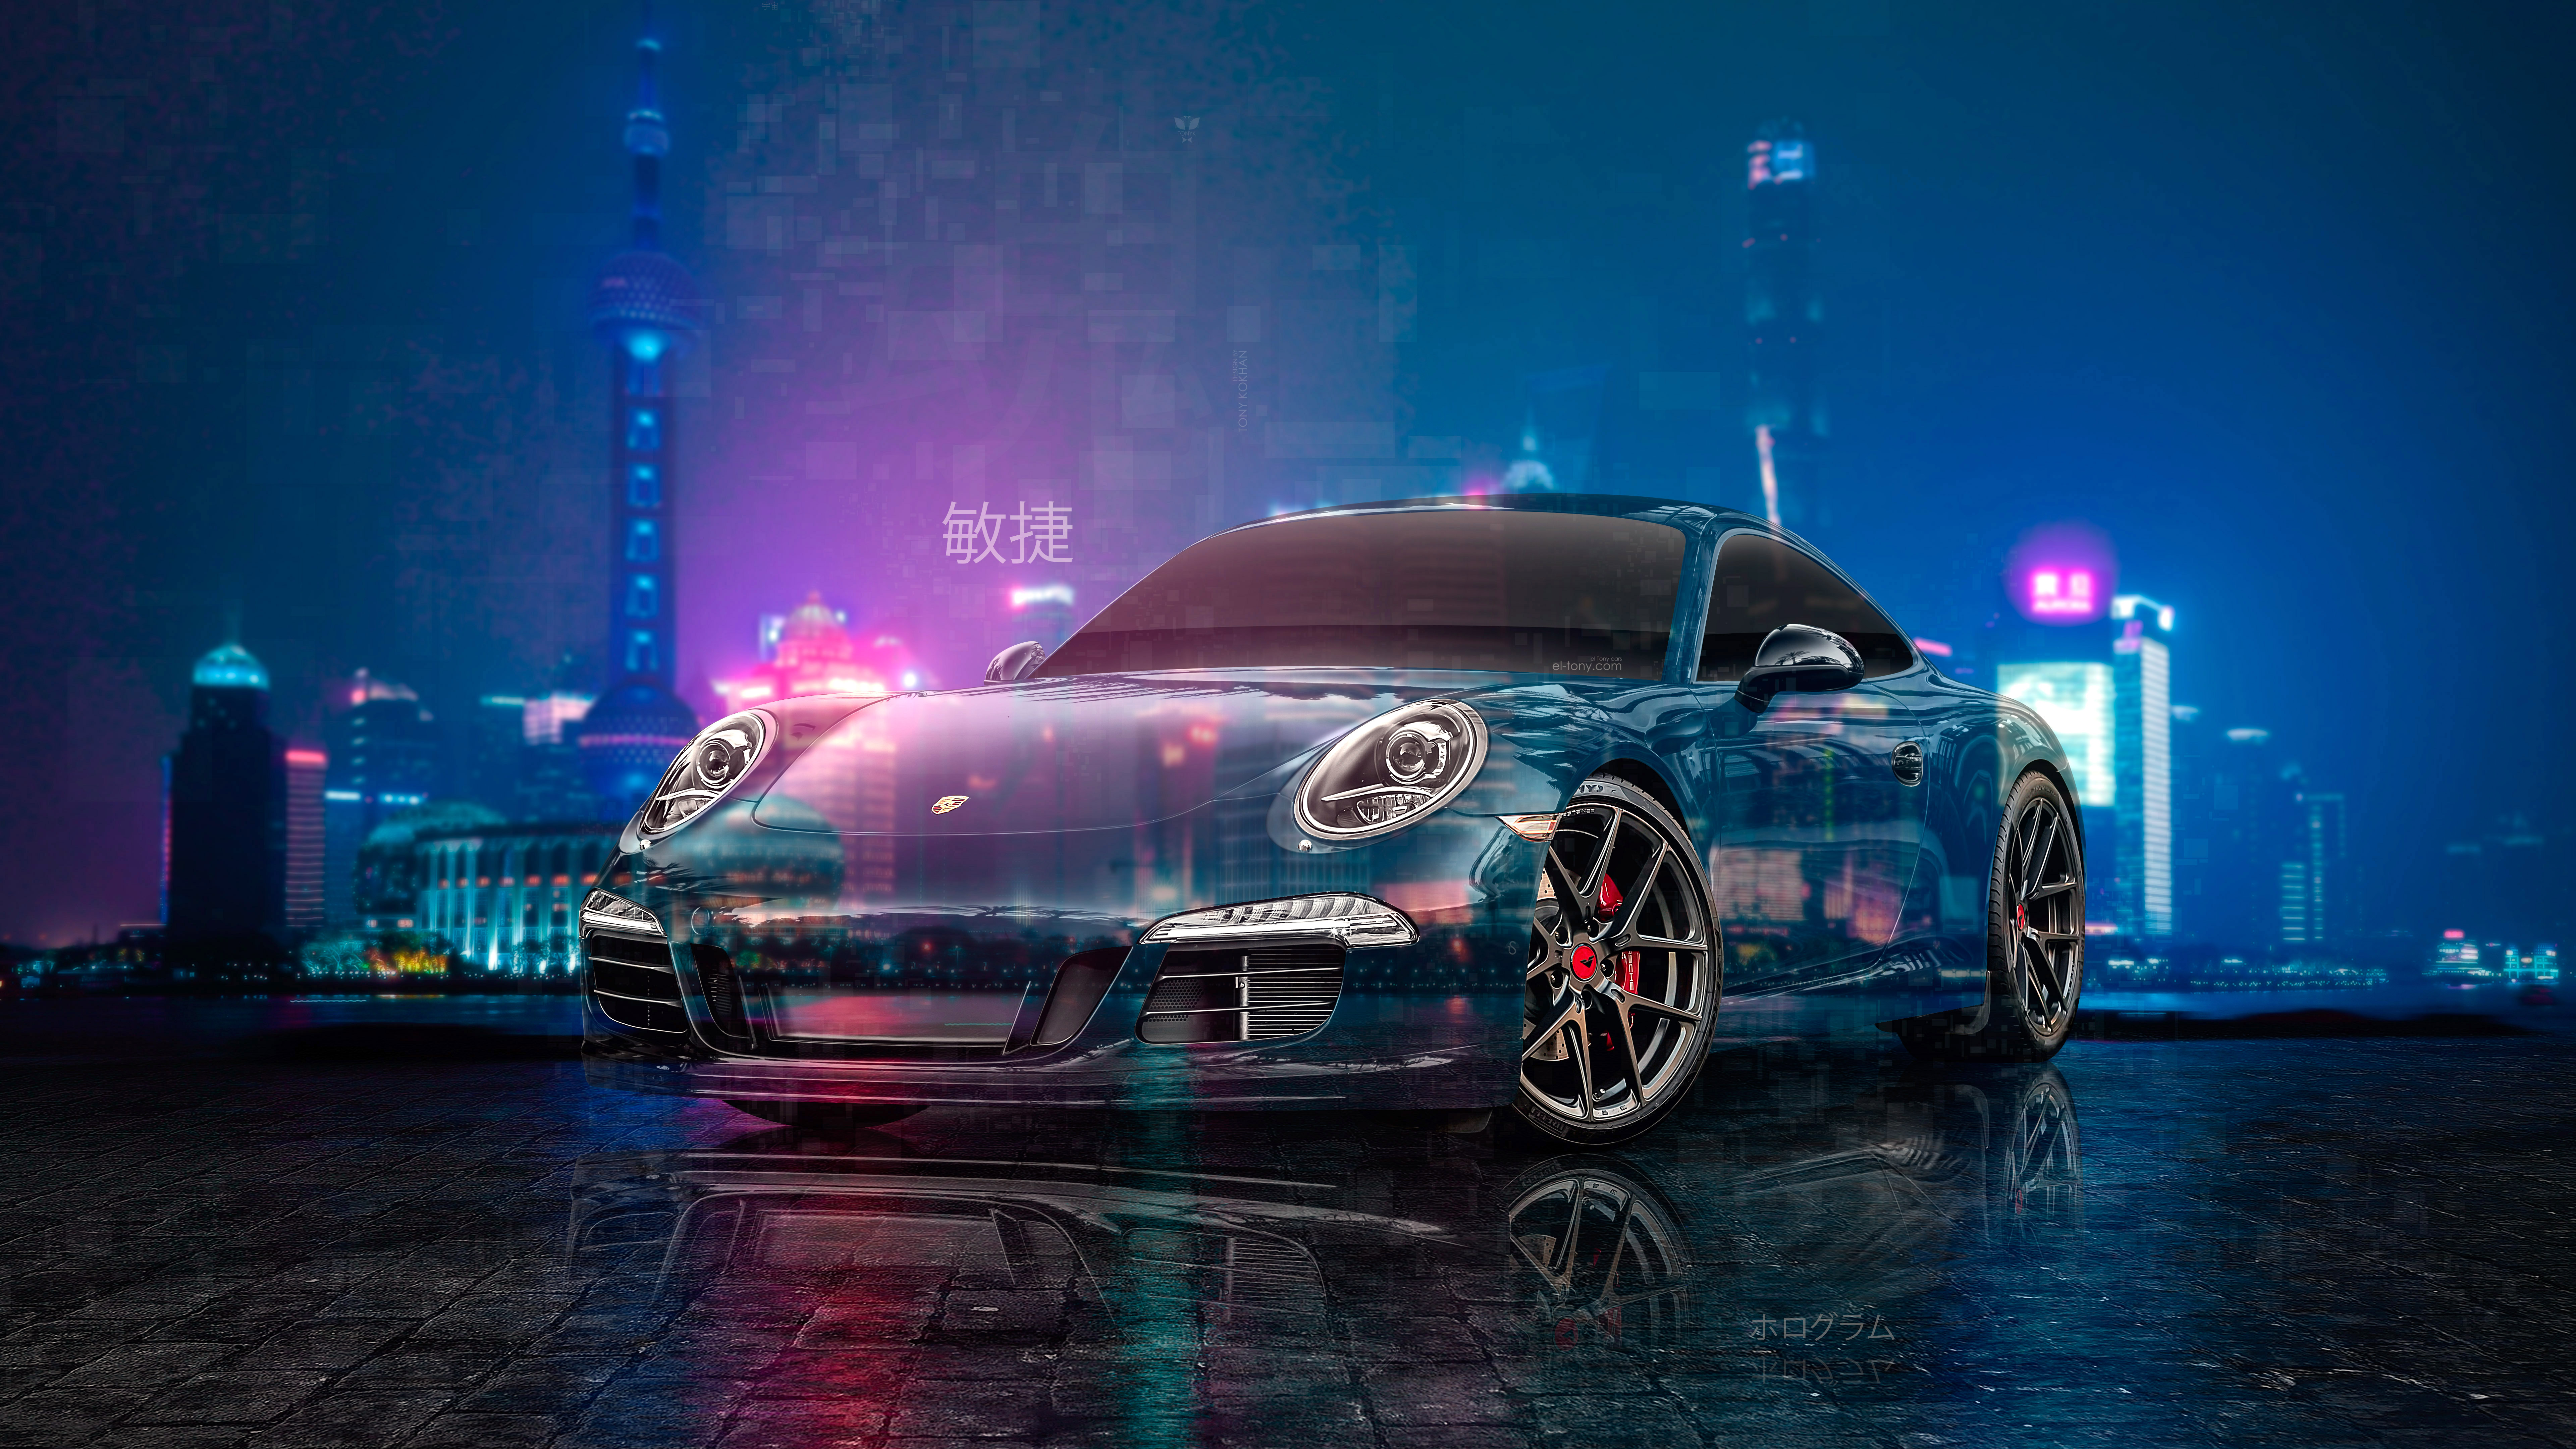 Porsche-991-Vorsteiner-Tuning-Super-Crystal-Night-City-Agile-Soul-Universe-TonySoul-Art-Car